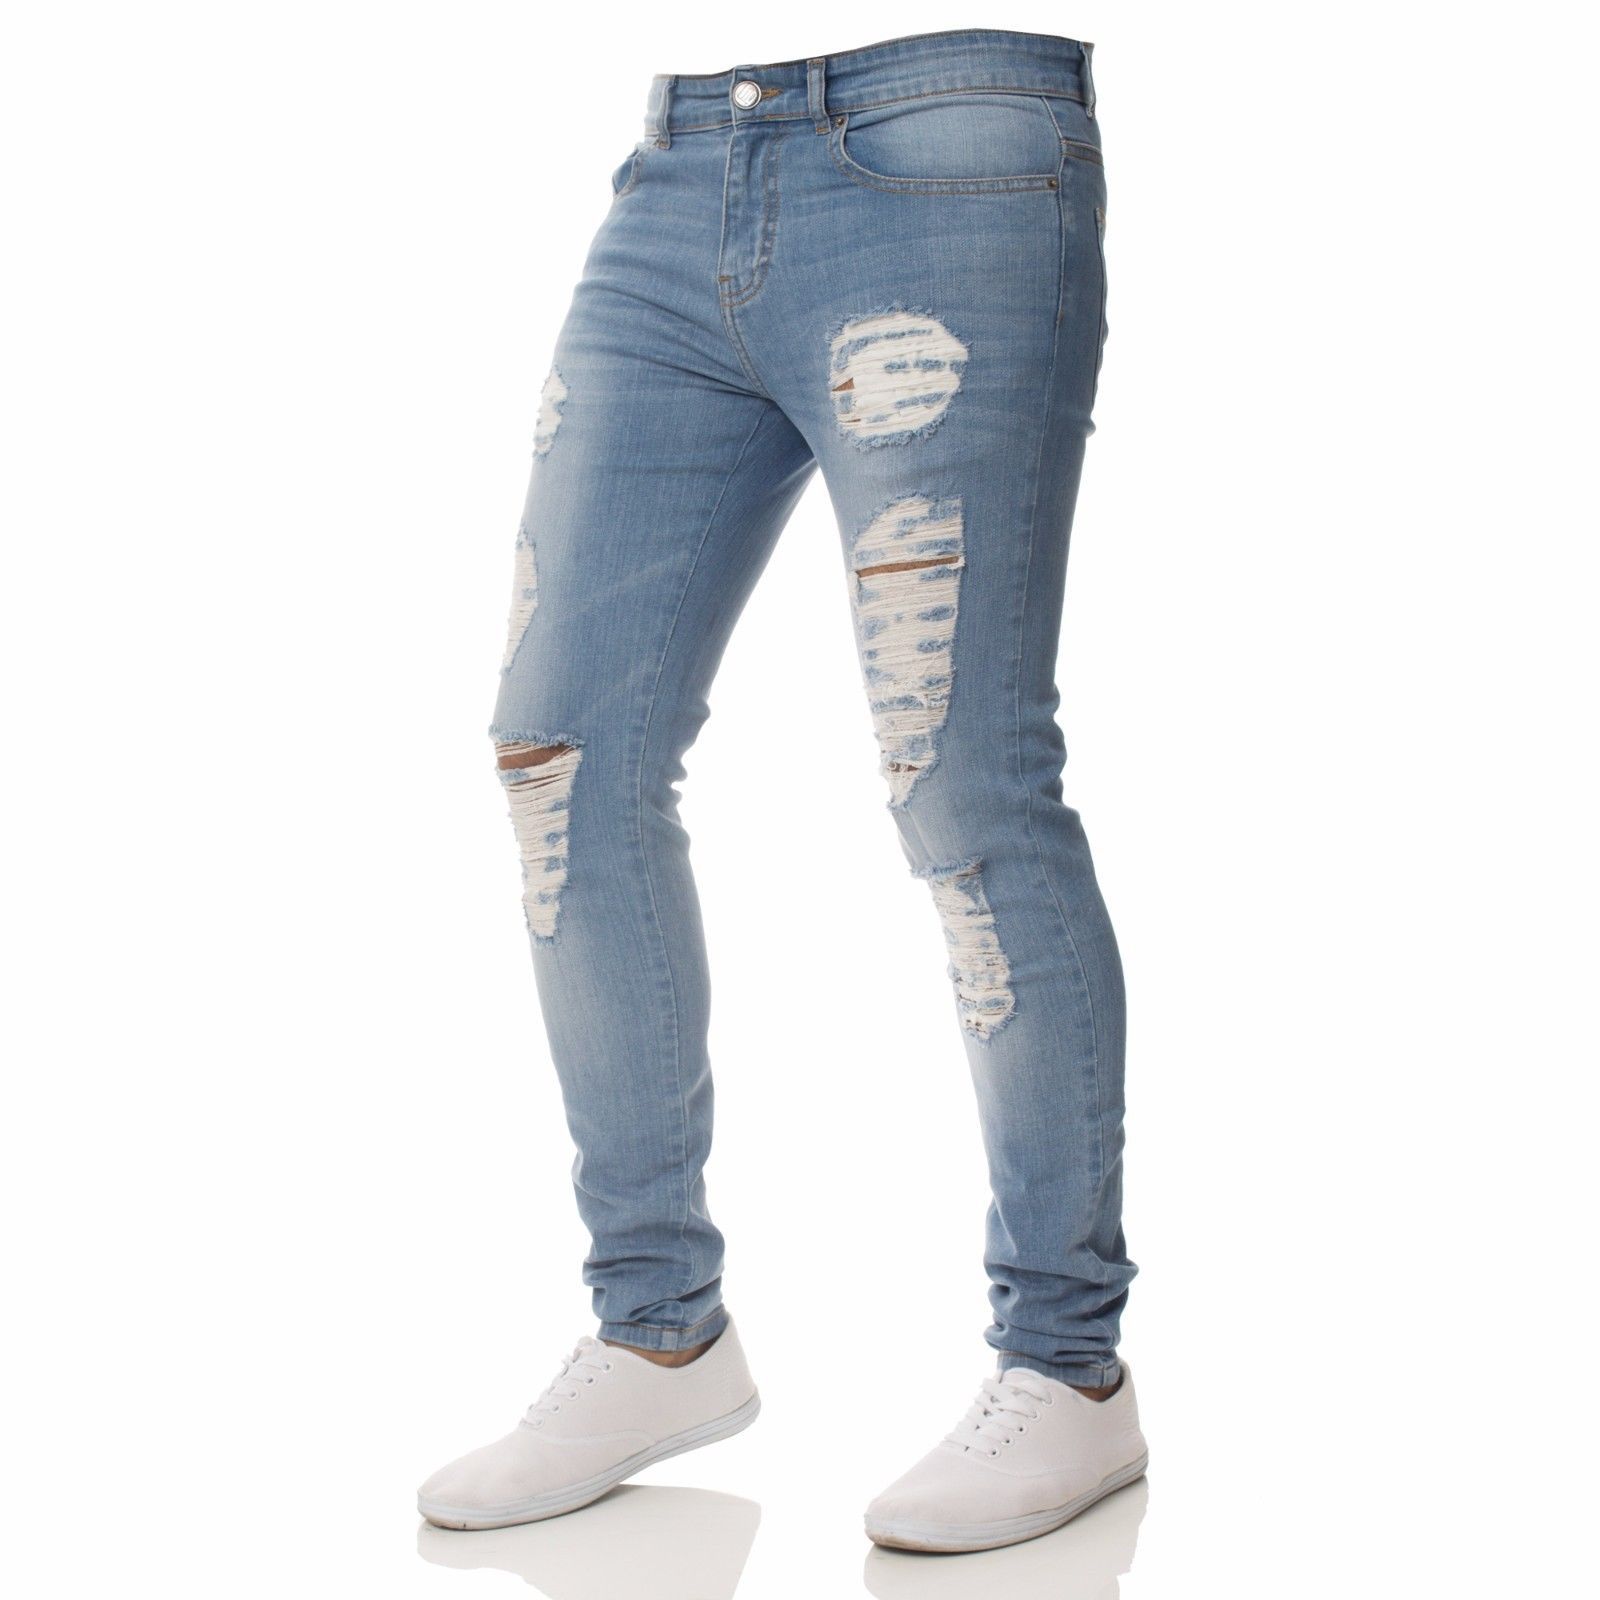 Casual Men'S Jeans Personality Hole Fit Small Leg Jeans Handsome Versatile Pants